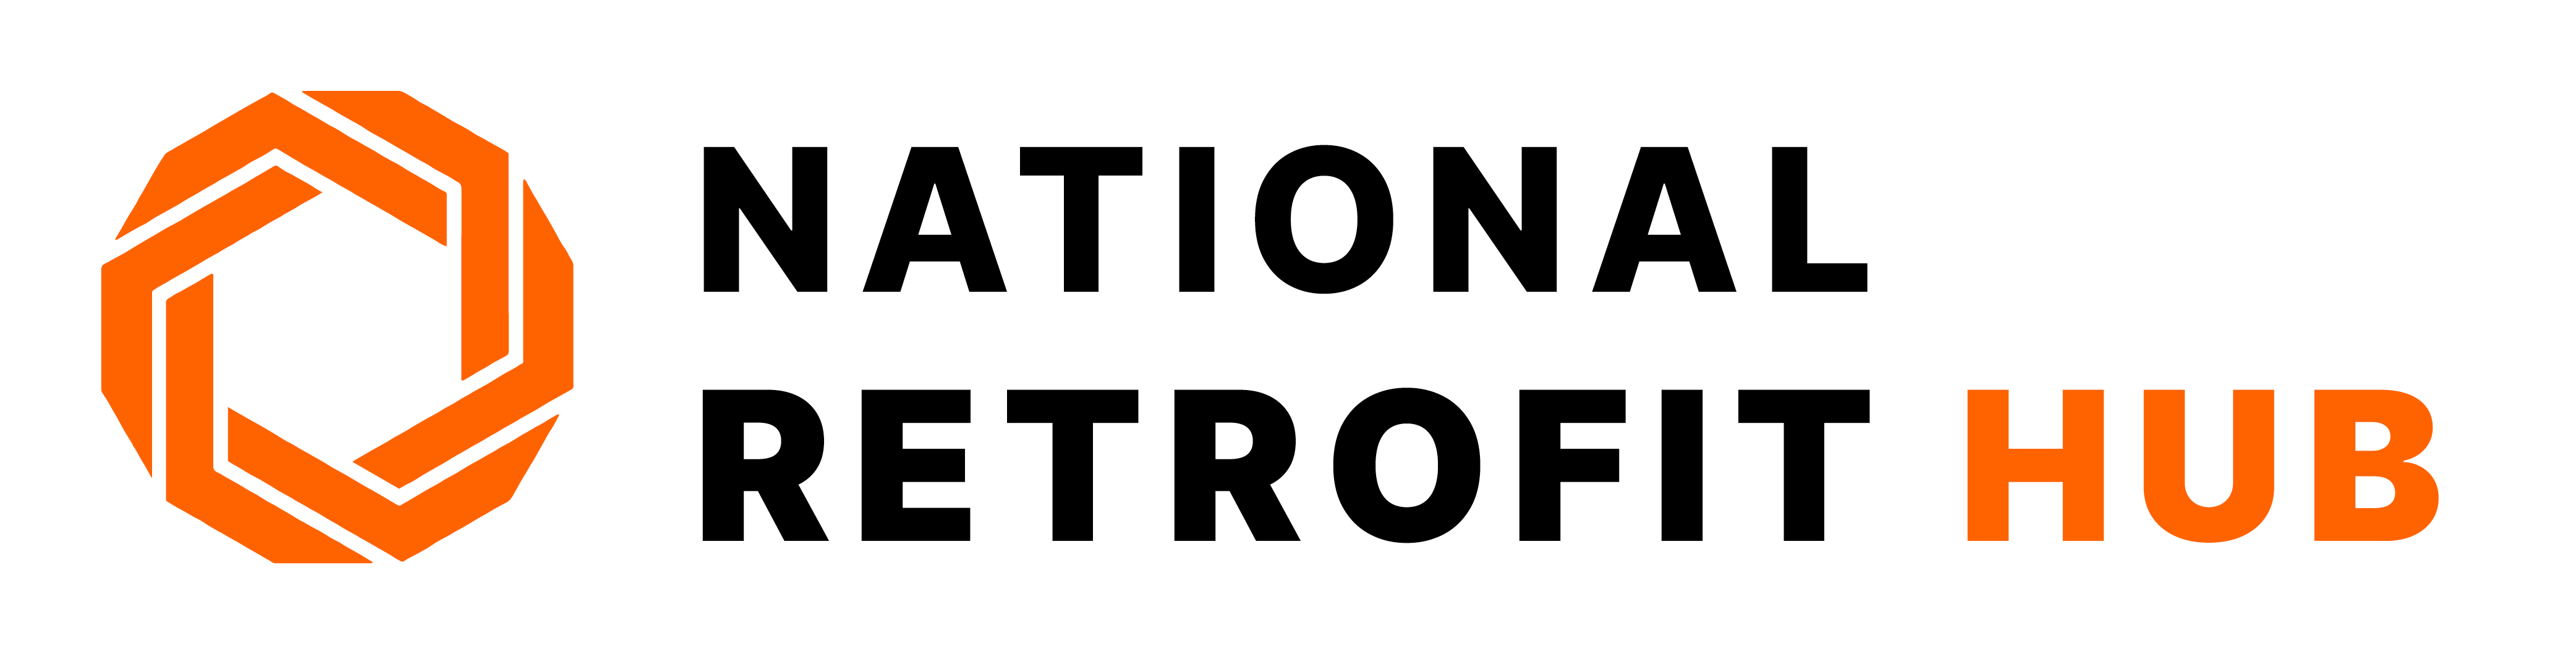 National Retrofit Hub Logo Primary